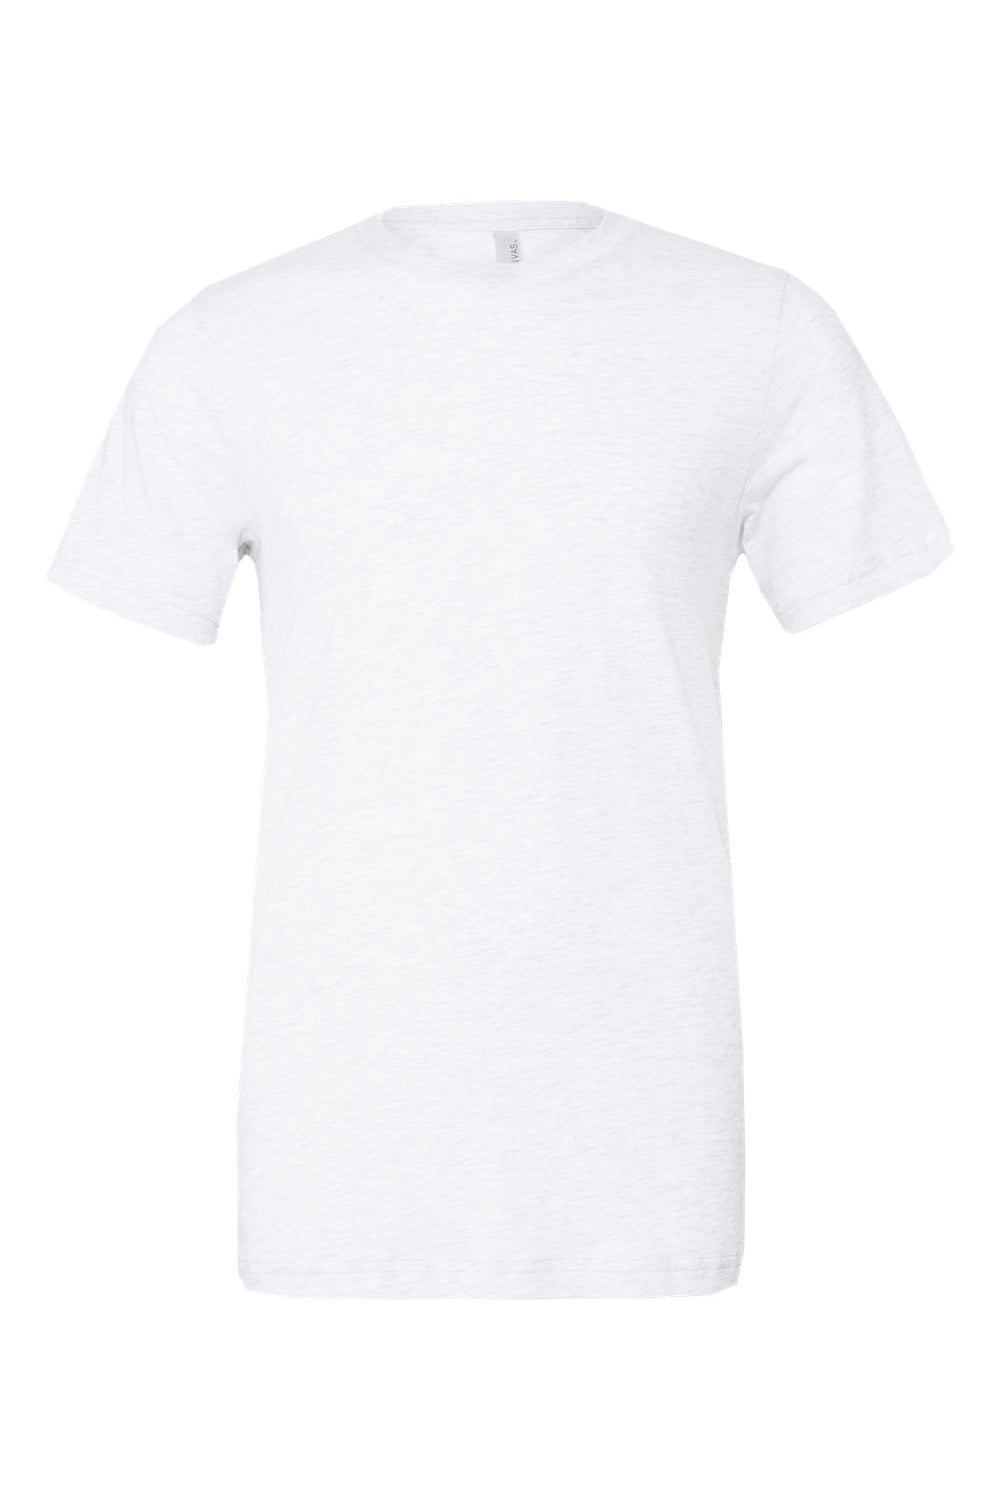 Bella + Canvas BC3413/3413C/3413 Mens Short Sleeve Crewneck T-Shirt Solid White Flat Front